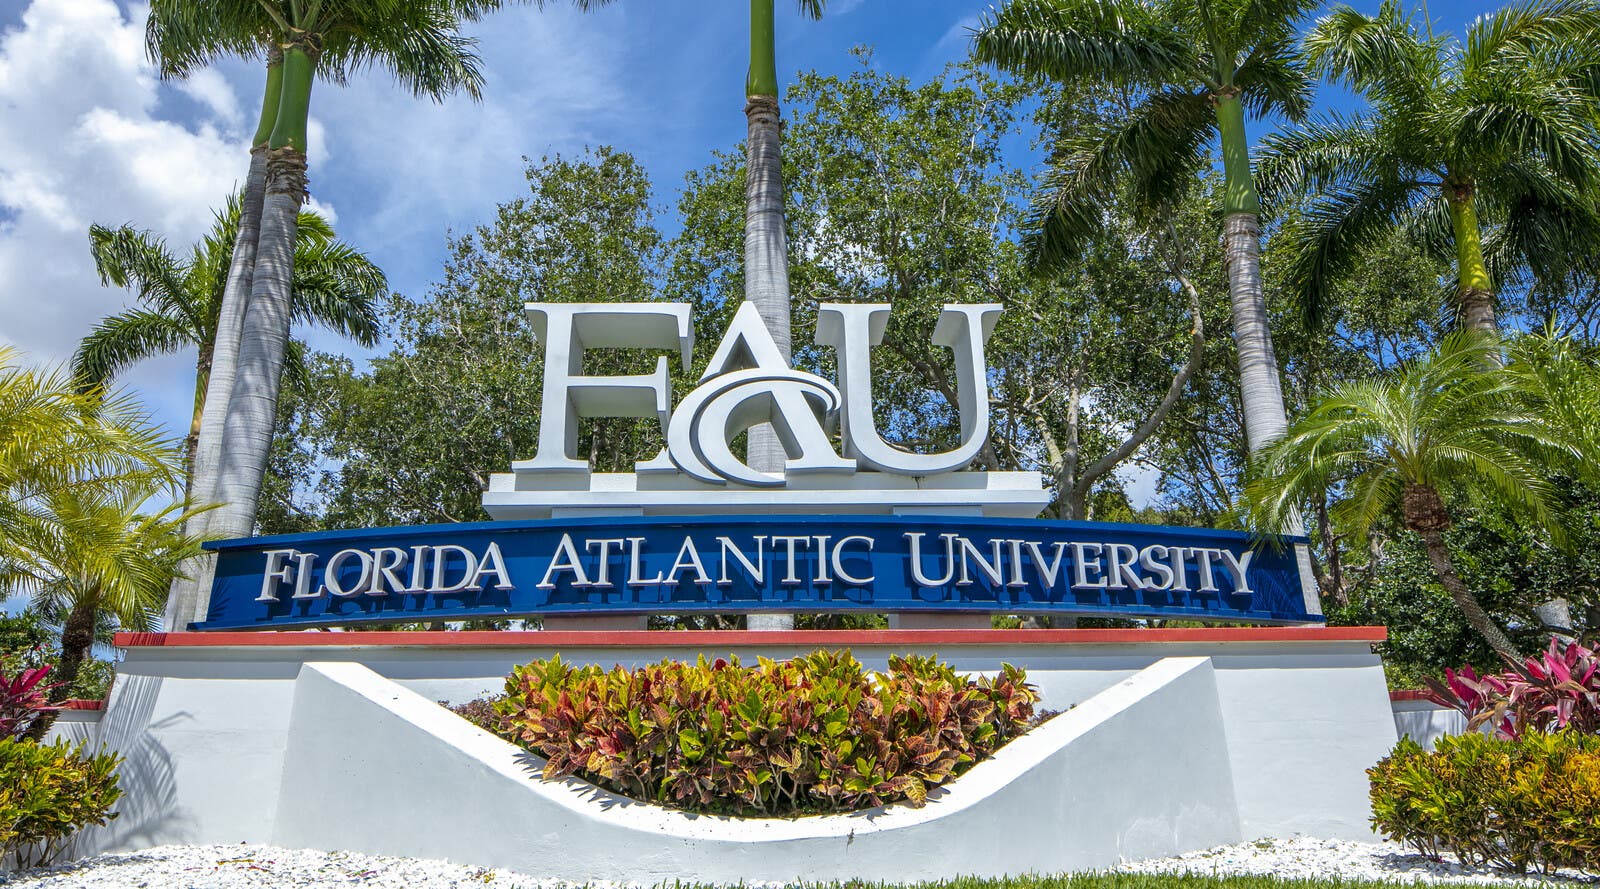 A large Florida Atlantic University sign on campus.